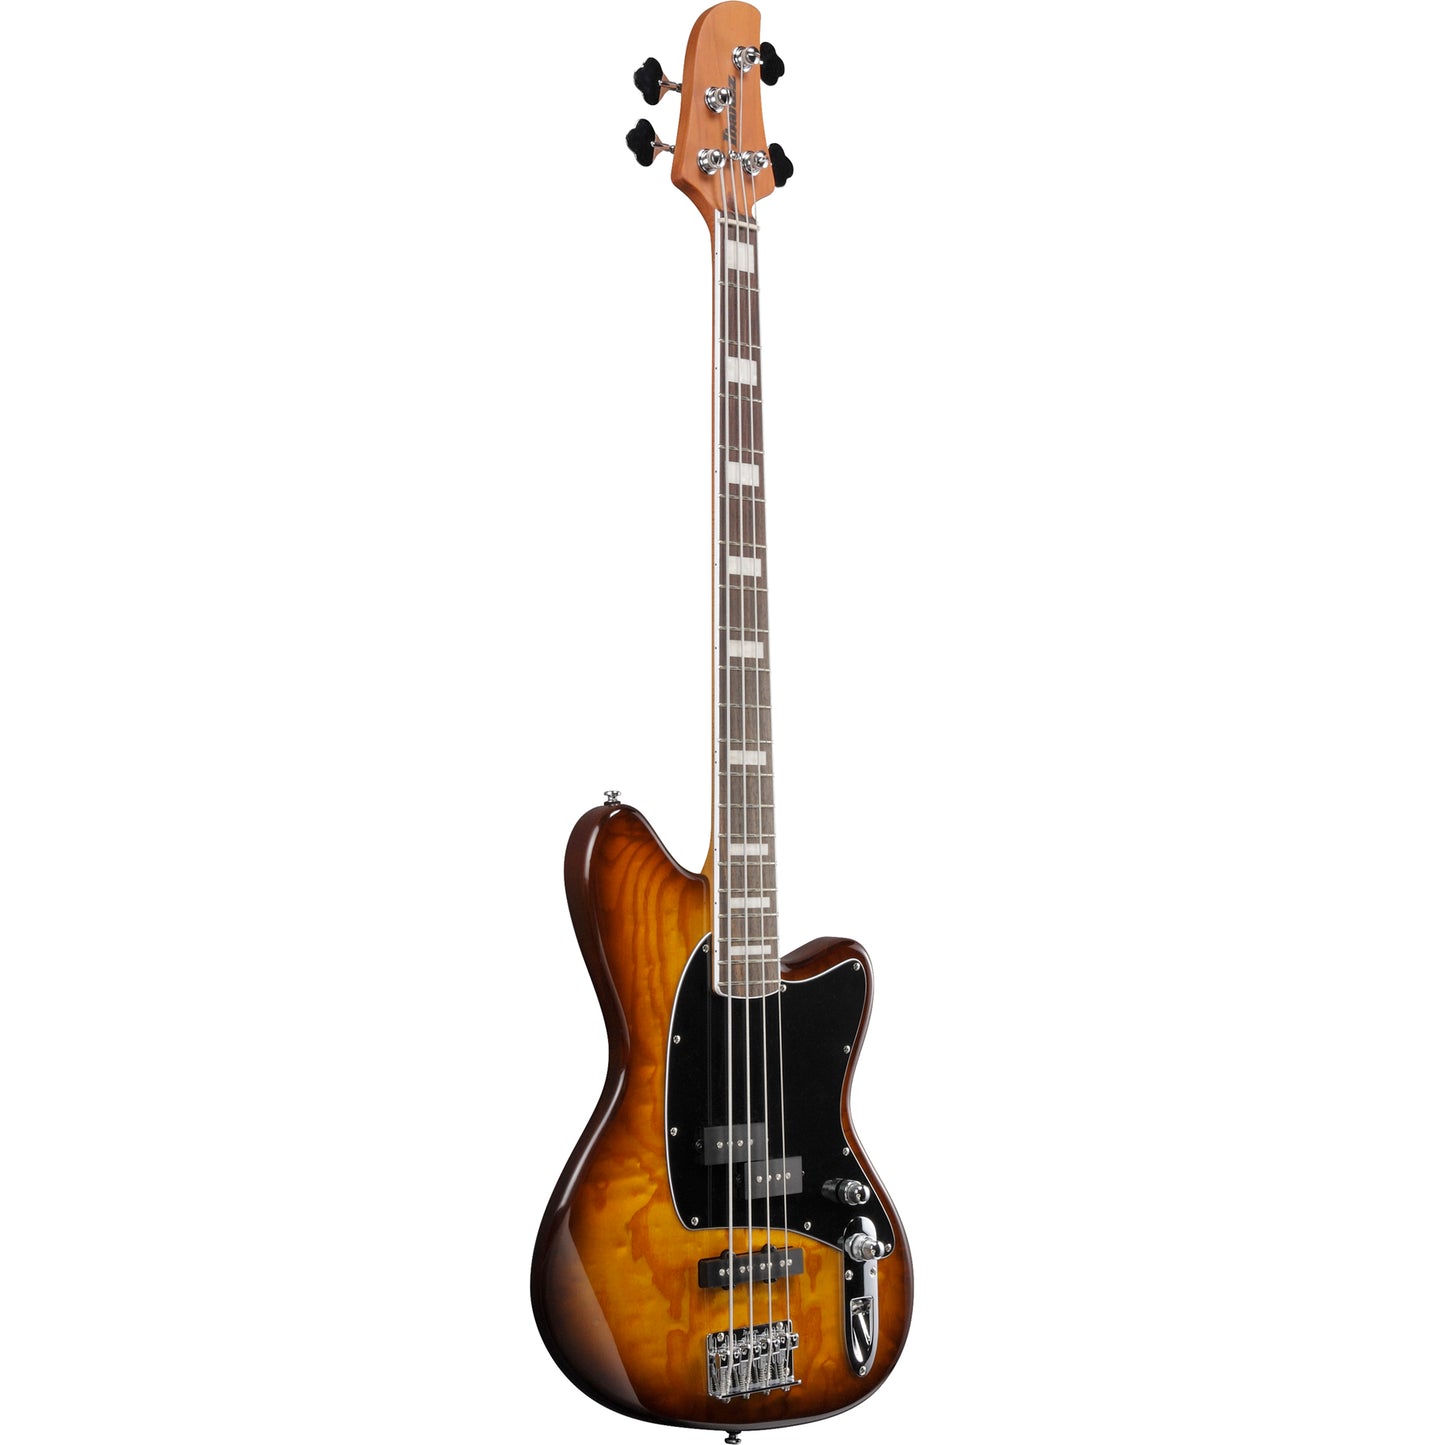 Ibanez Talman Bass Standard 4 String Electric Bass - Iced Americano Burst